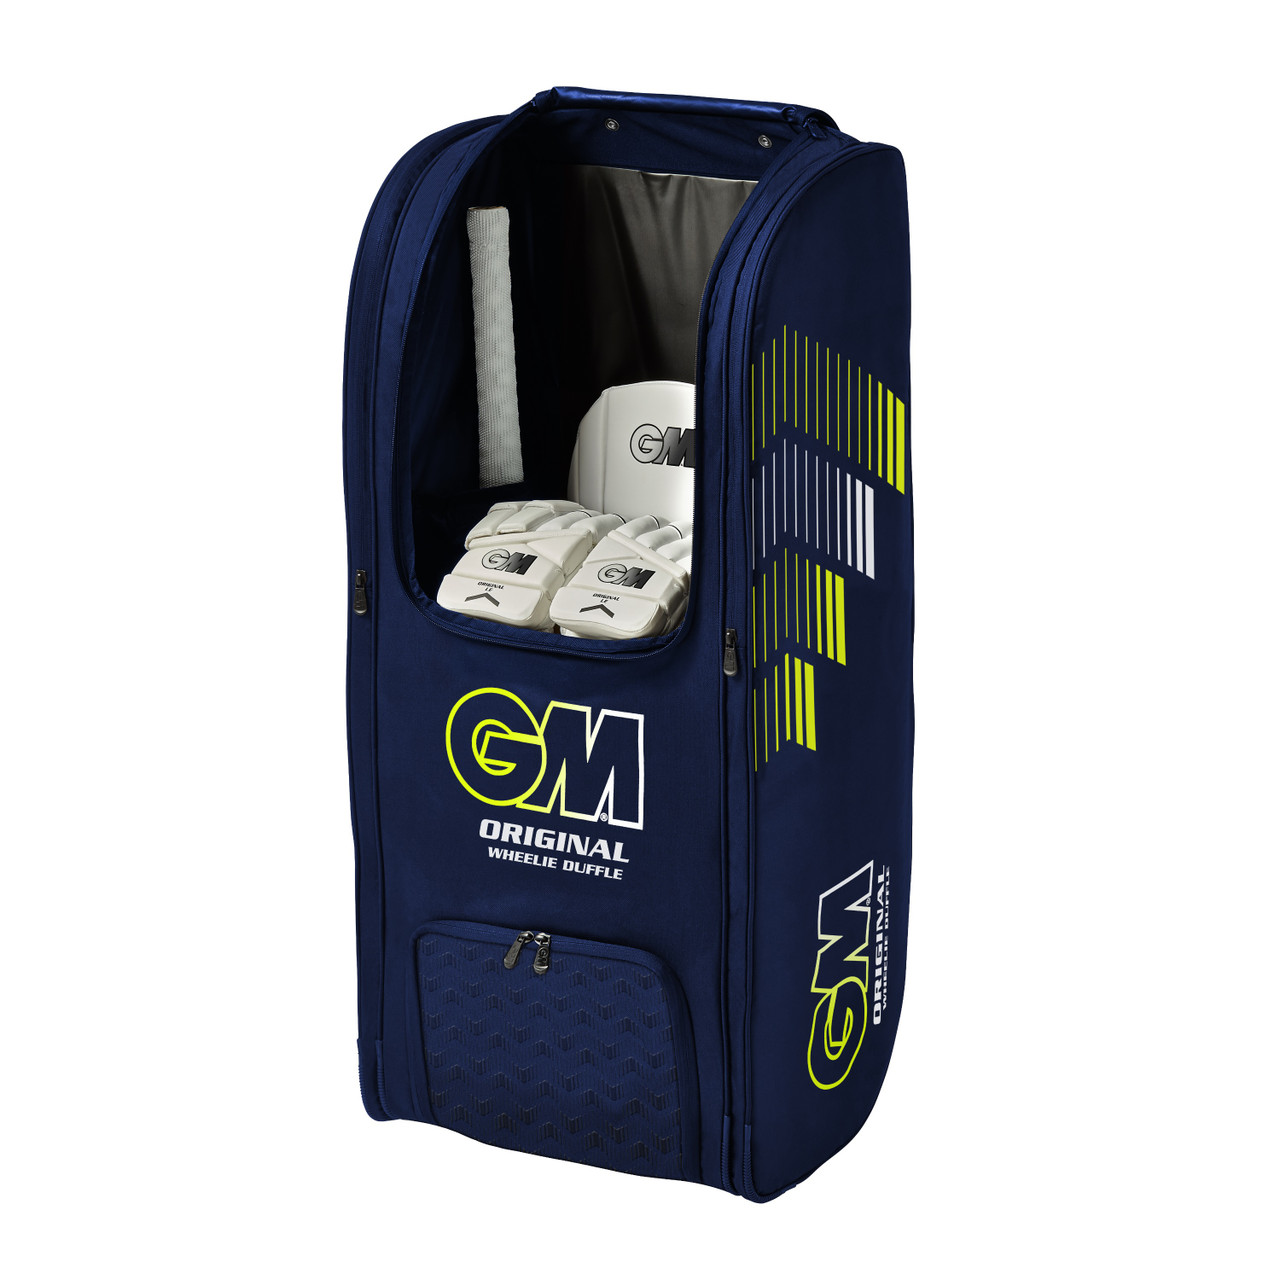 GM 707 Wheelie Bag - Cricket Bags